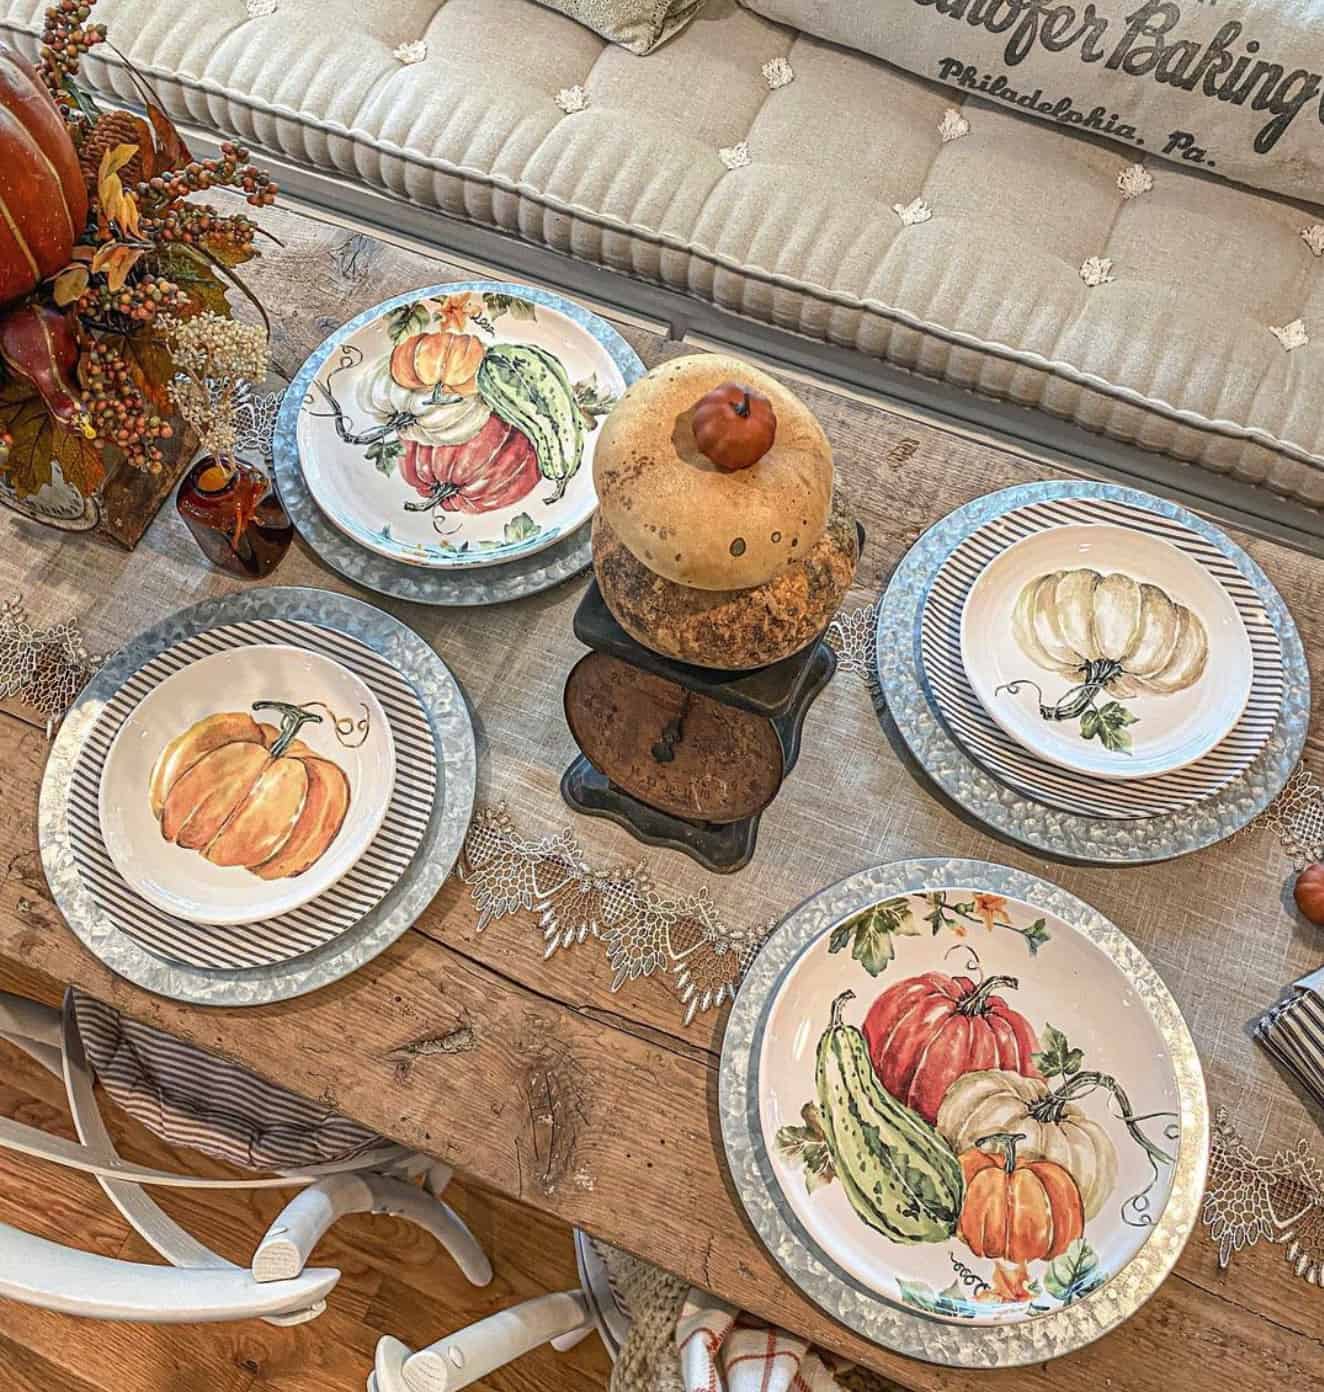 fall-pumpkin-centerpiece-table-decor